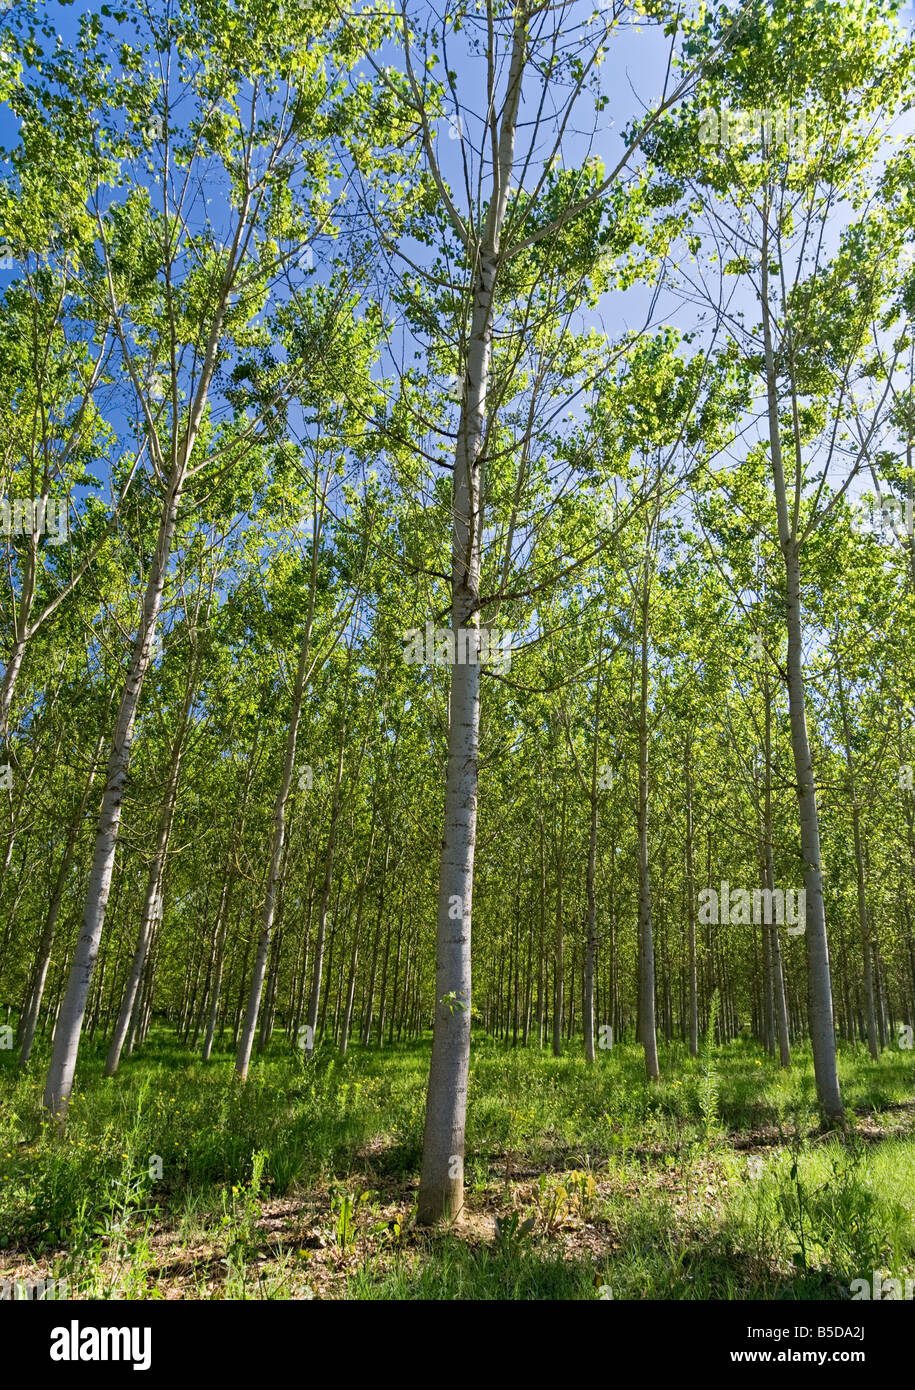 Managed forest of Silver Birch trees Tarn et Garonne Southwest France Europe Stock Photo